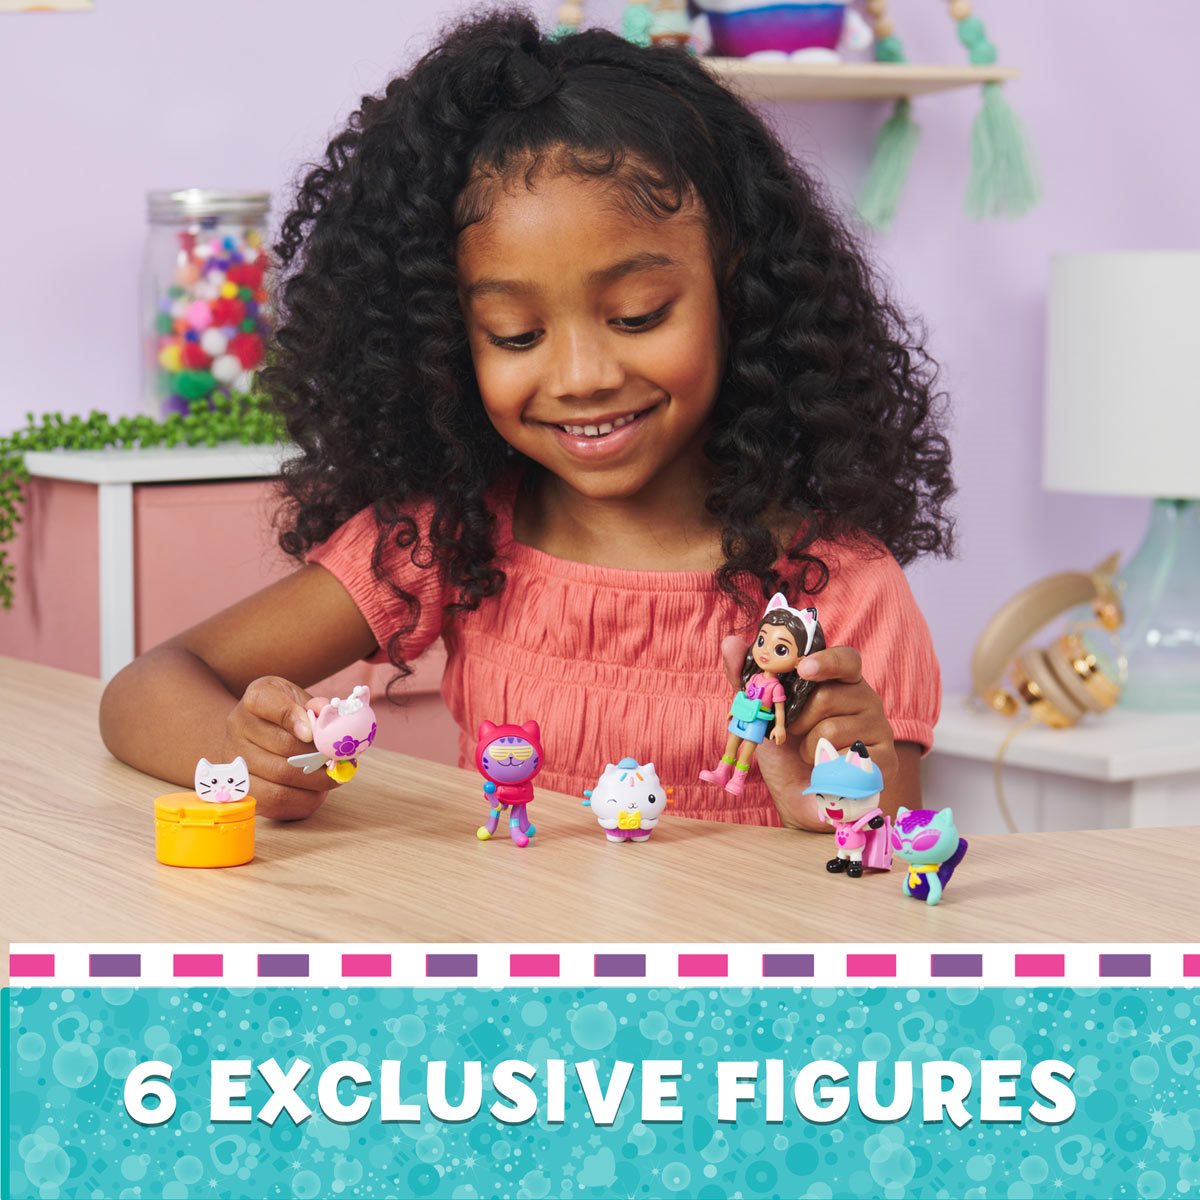 Gabby's Dollhouse - Deluxe figure set